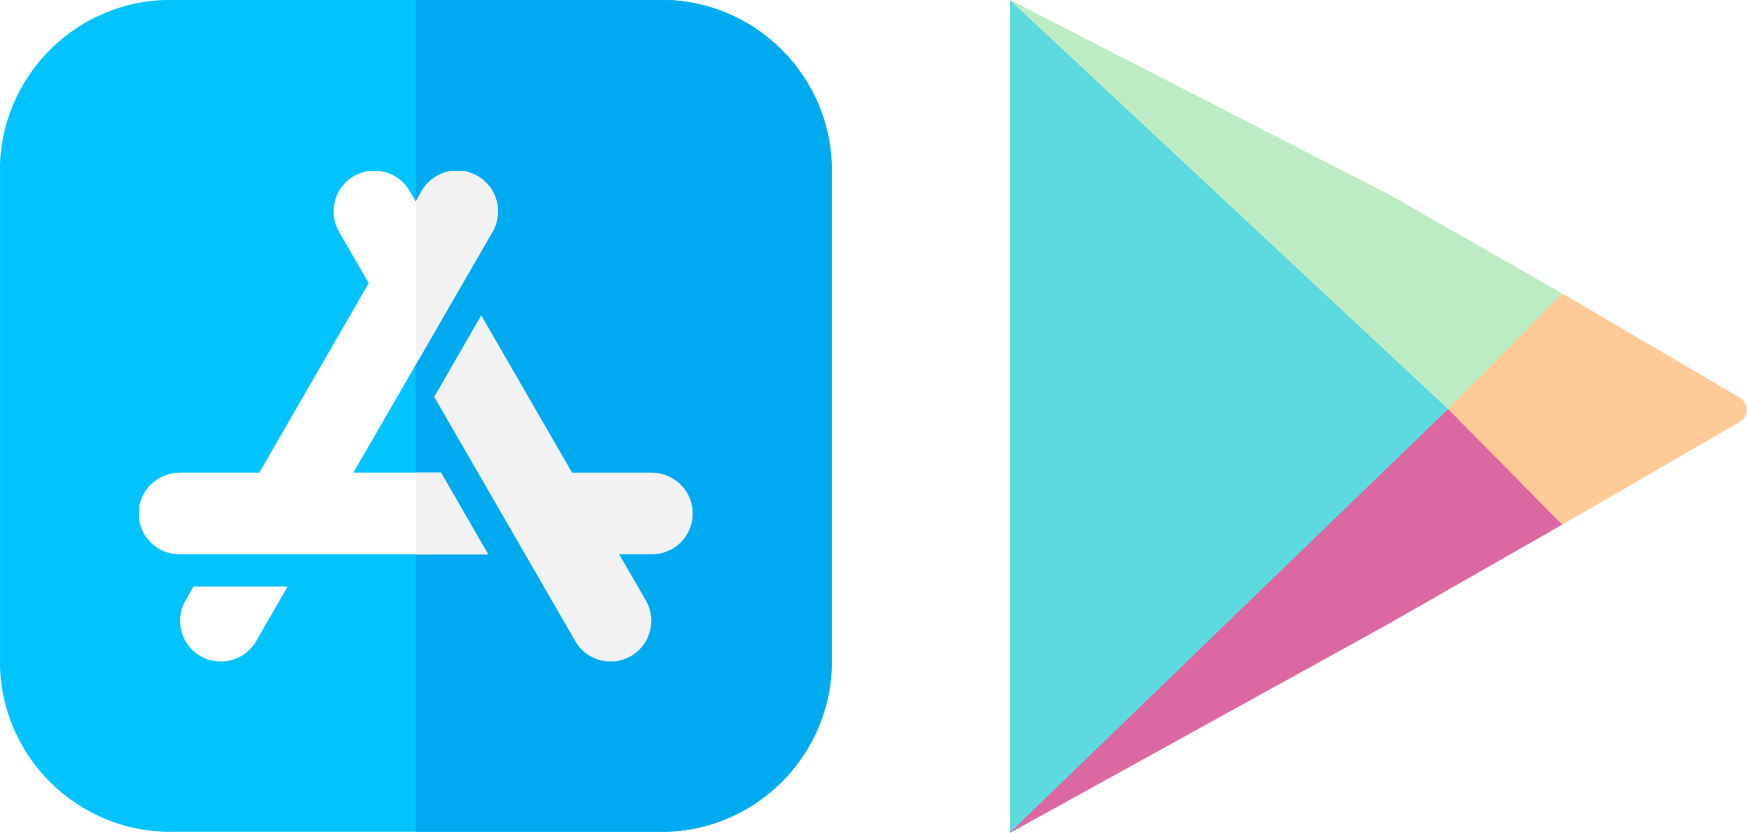 iphone app store logo